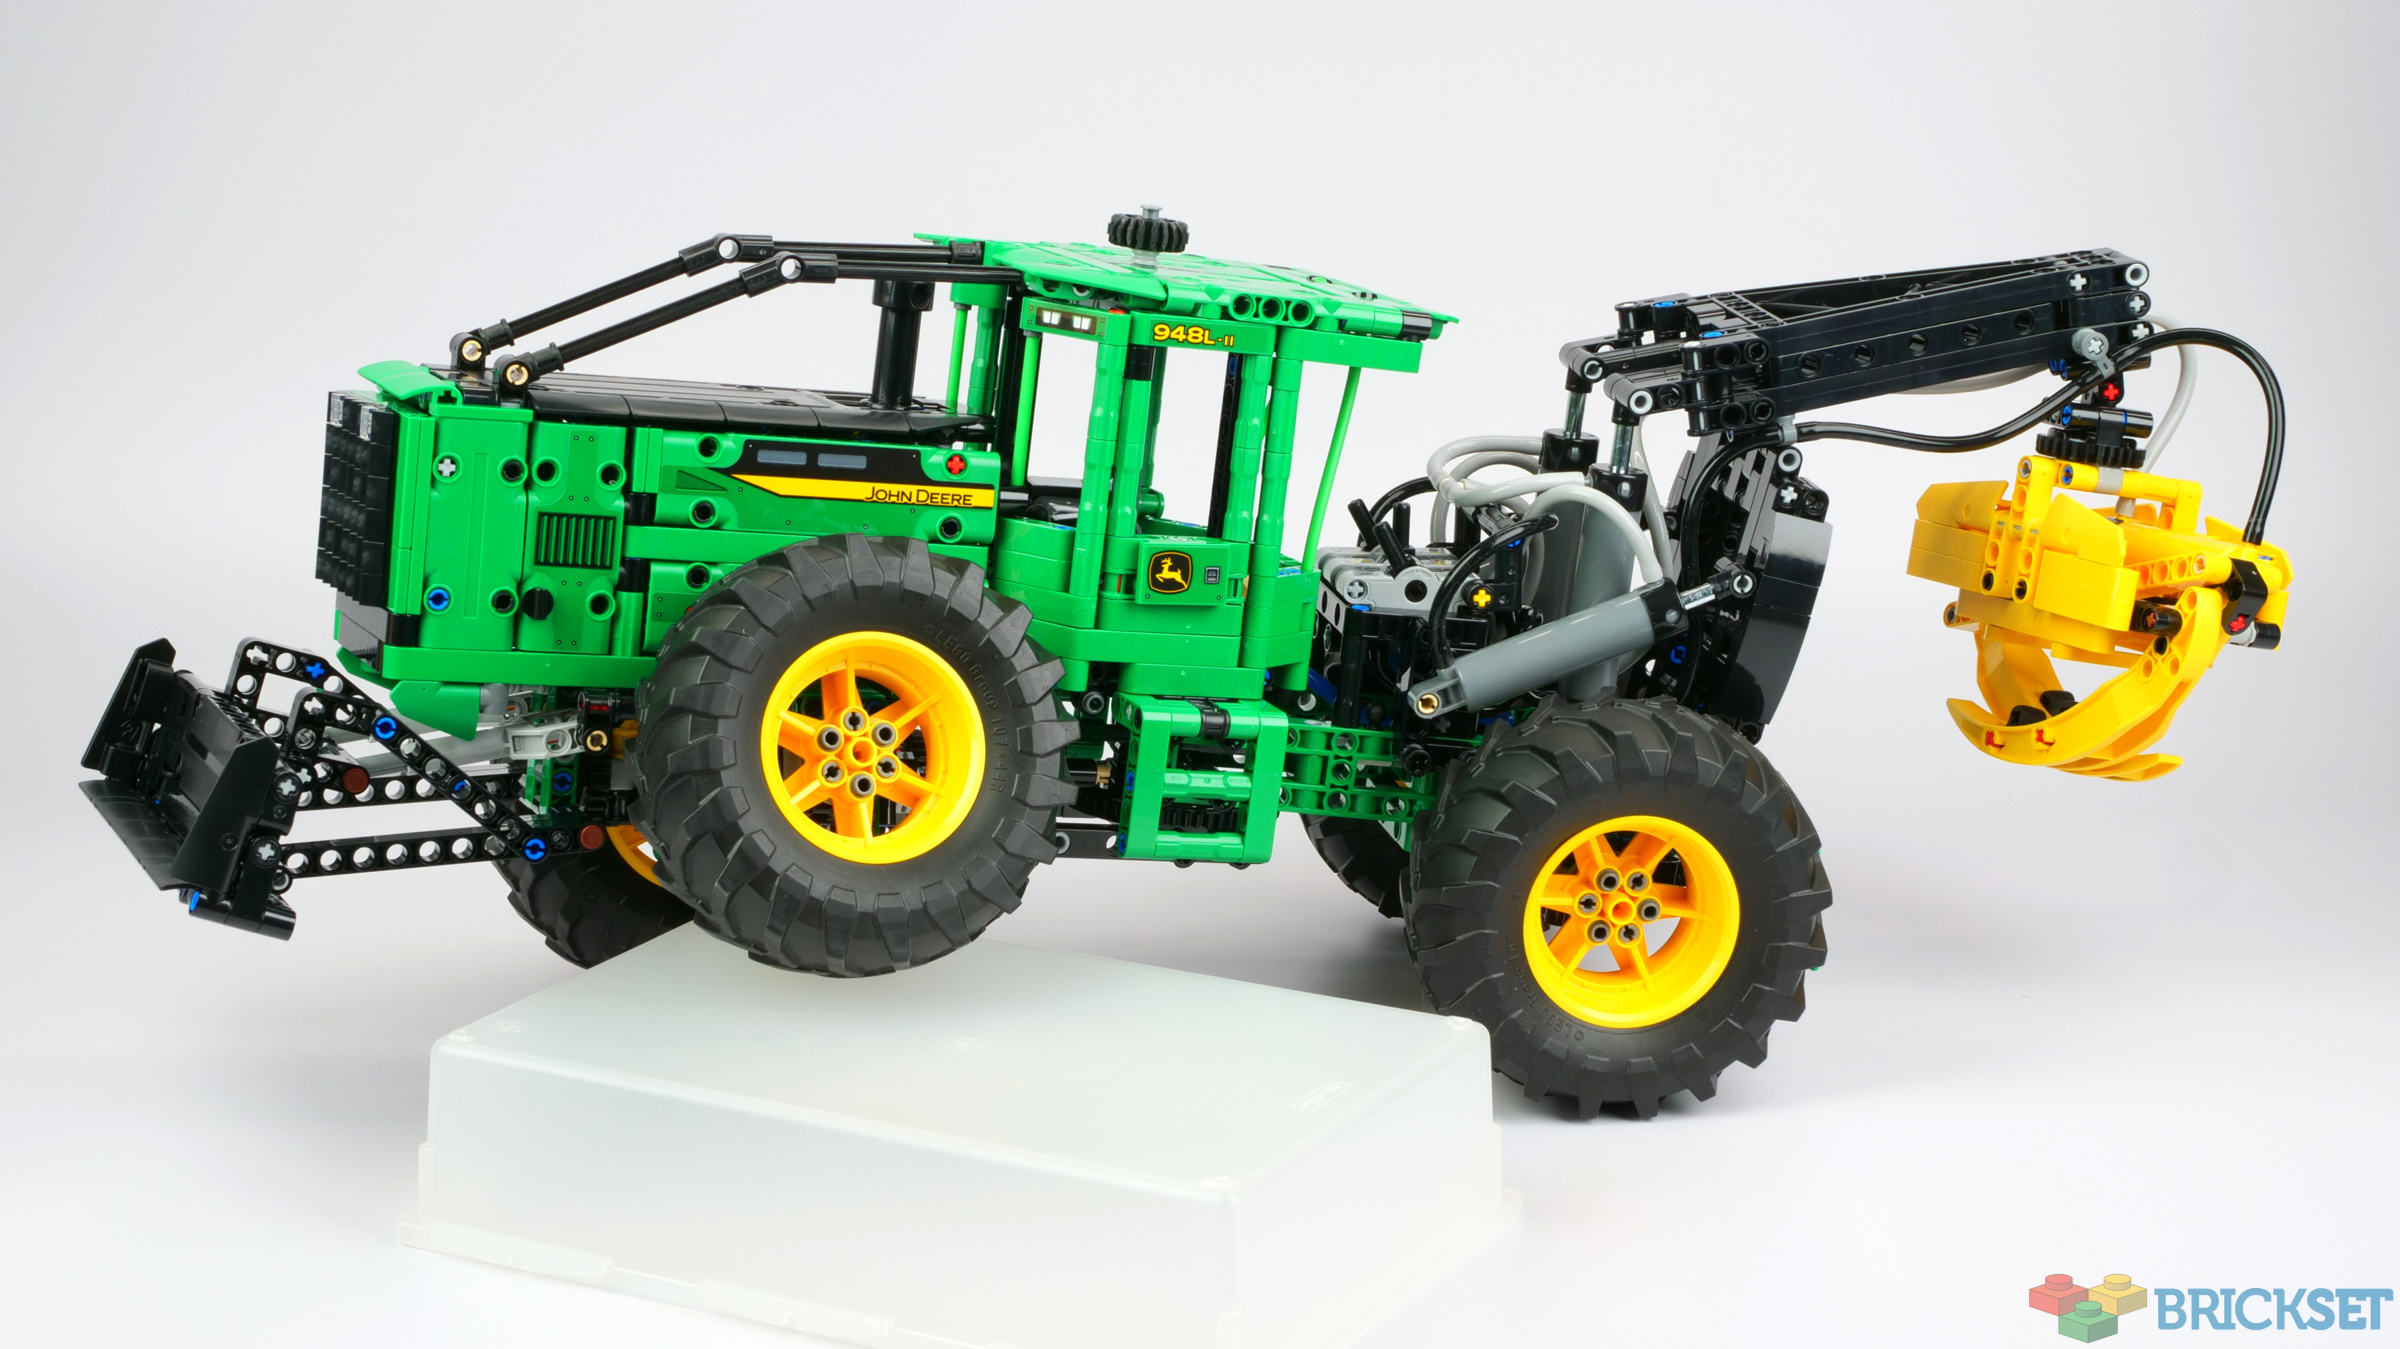 LEGO 42157 John Deere 948L II Skidder review